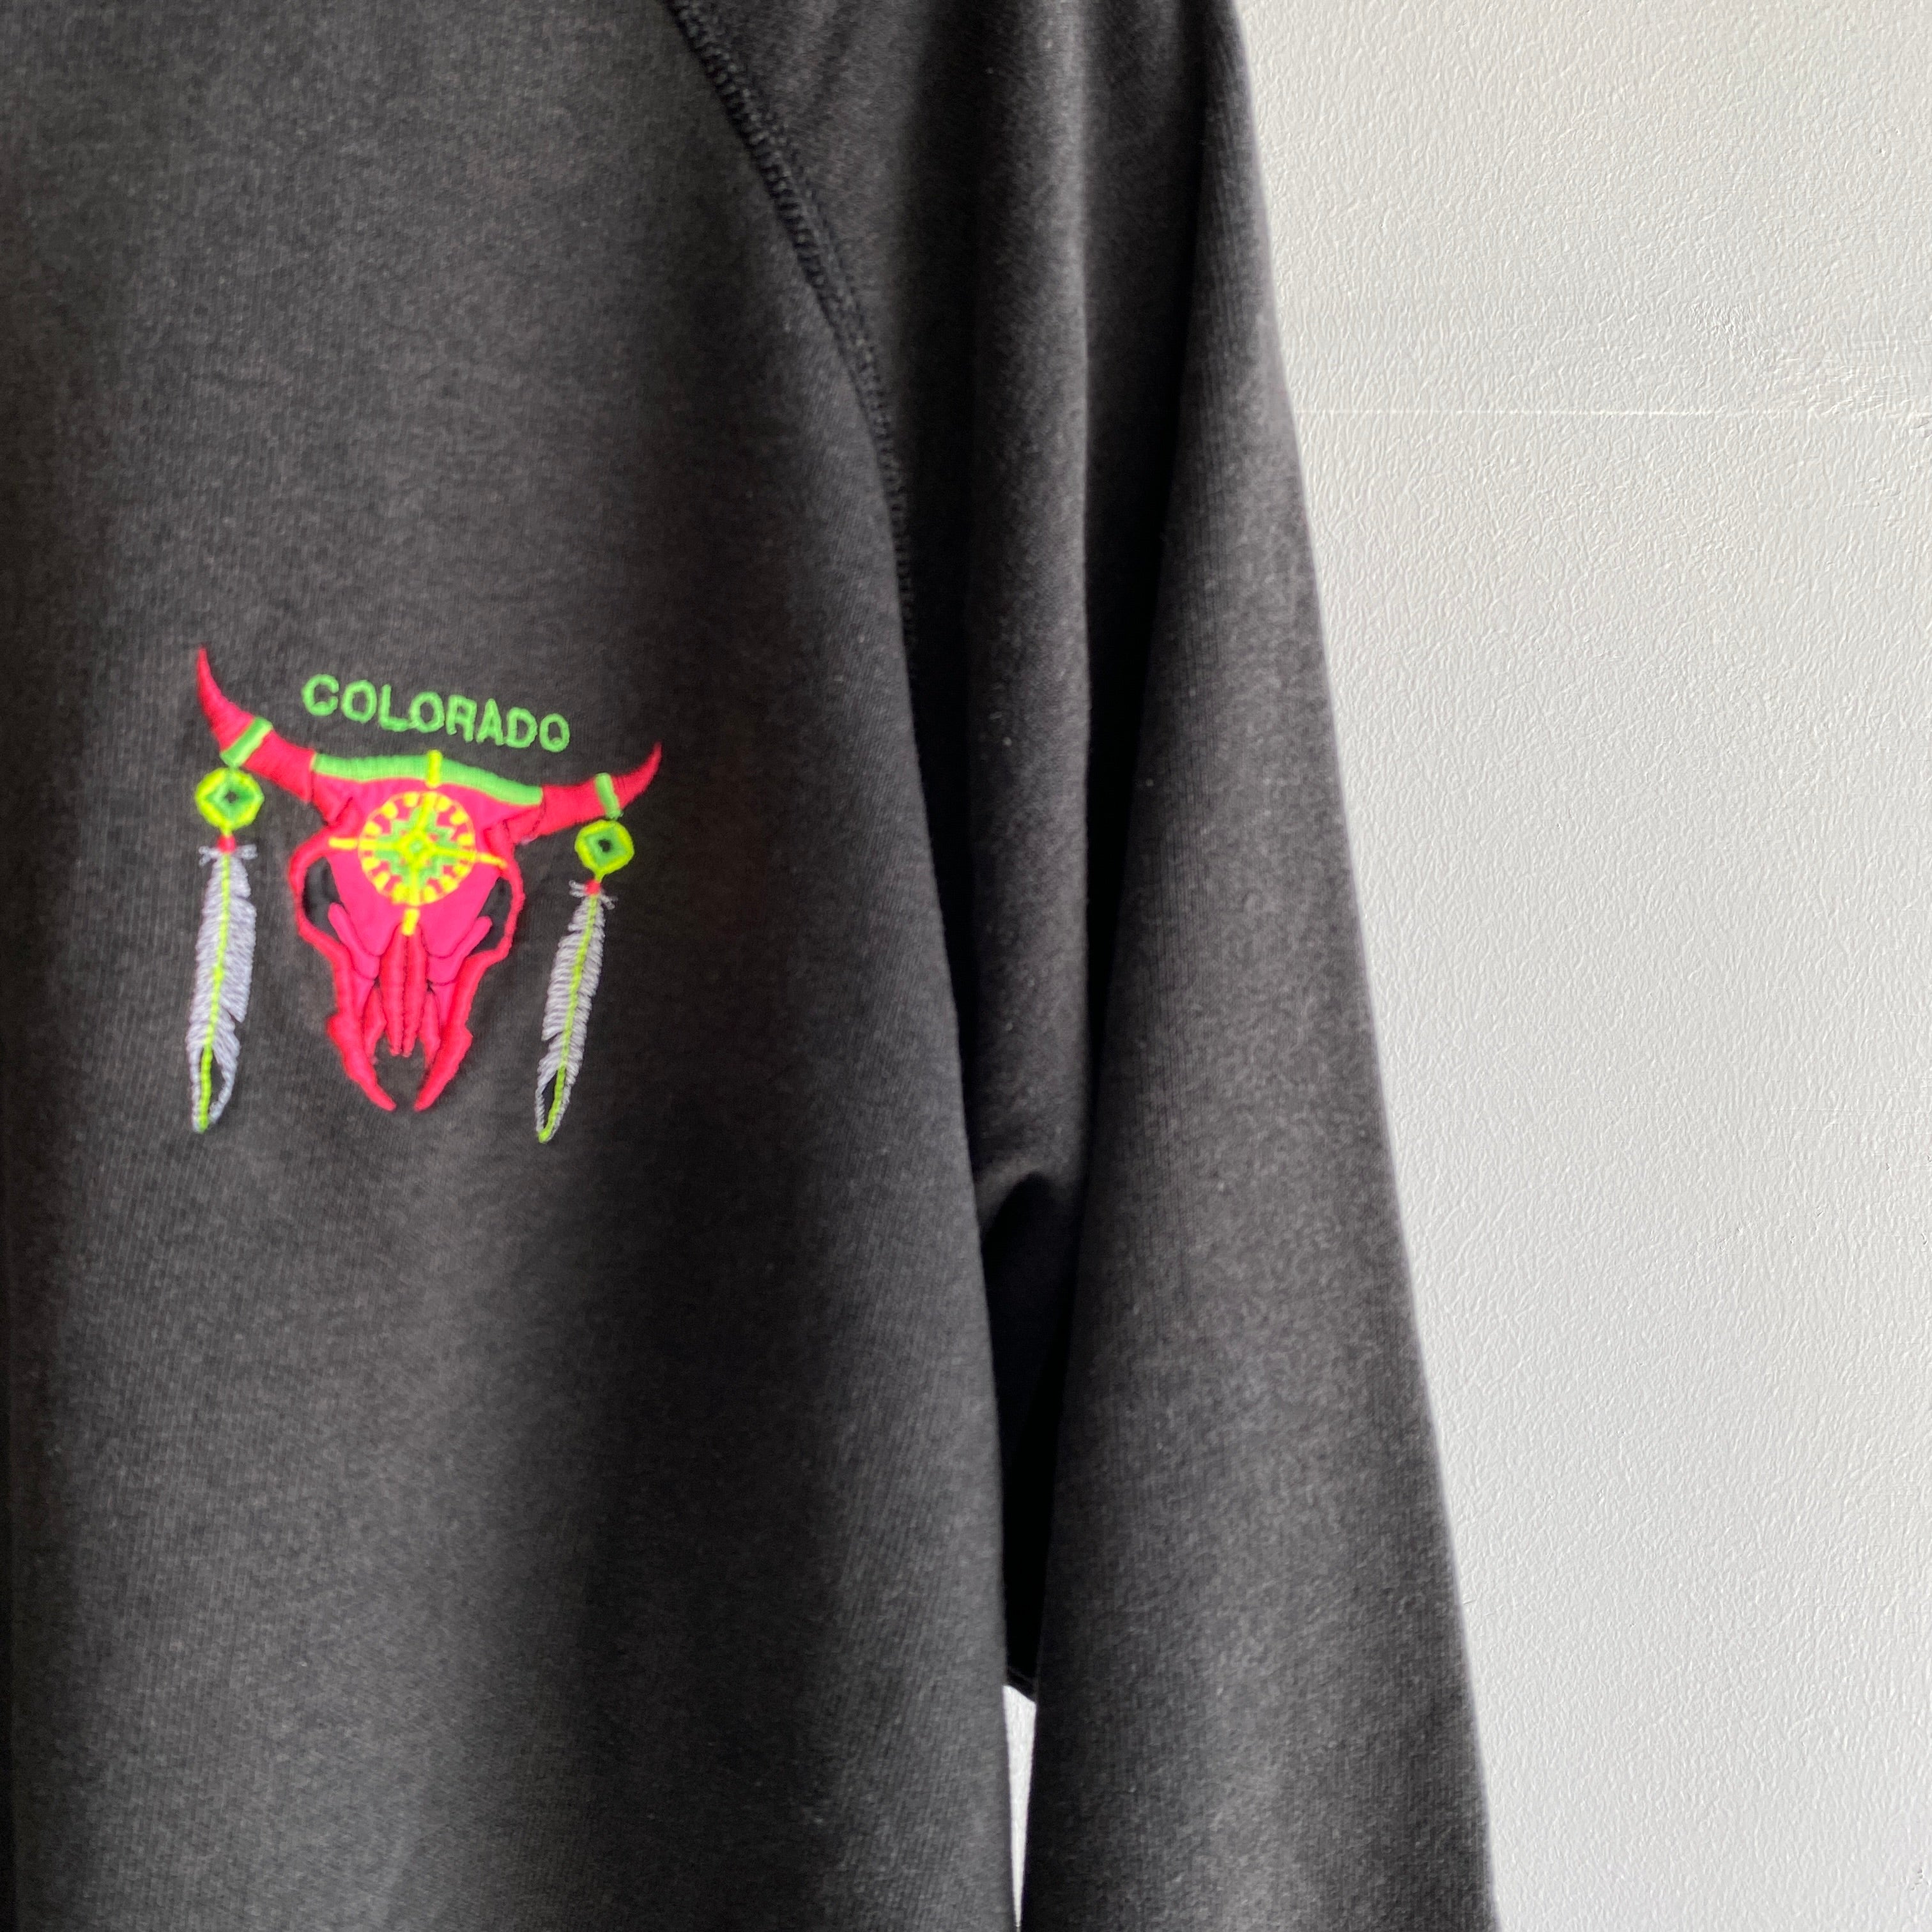 1980s Built-In Collared Colorado Sweatshirt - Fancy!